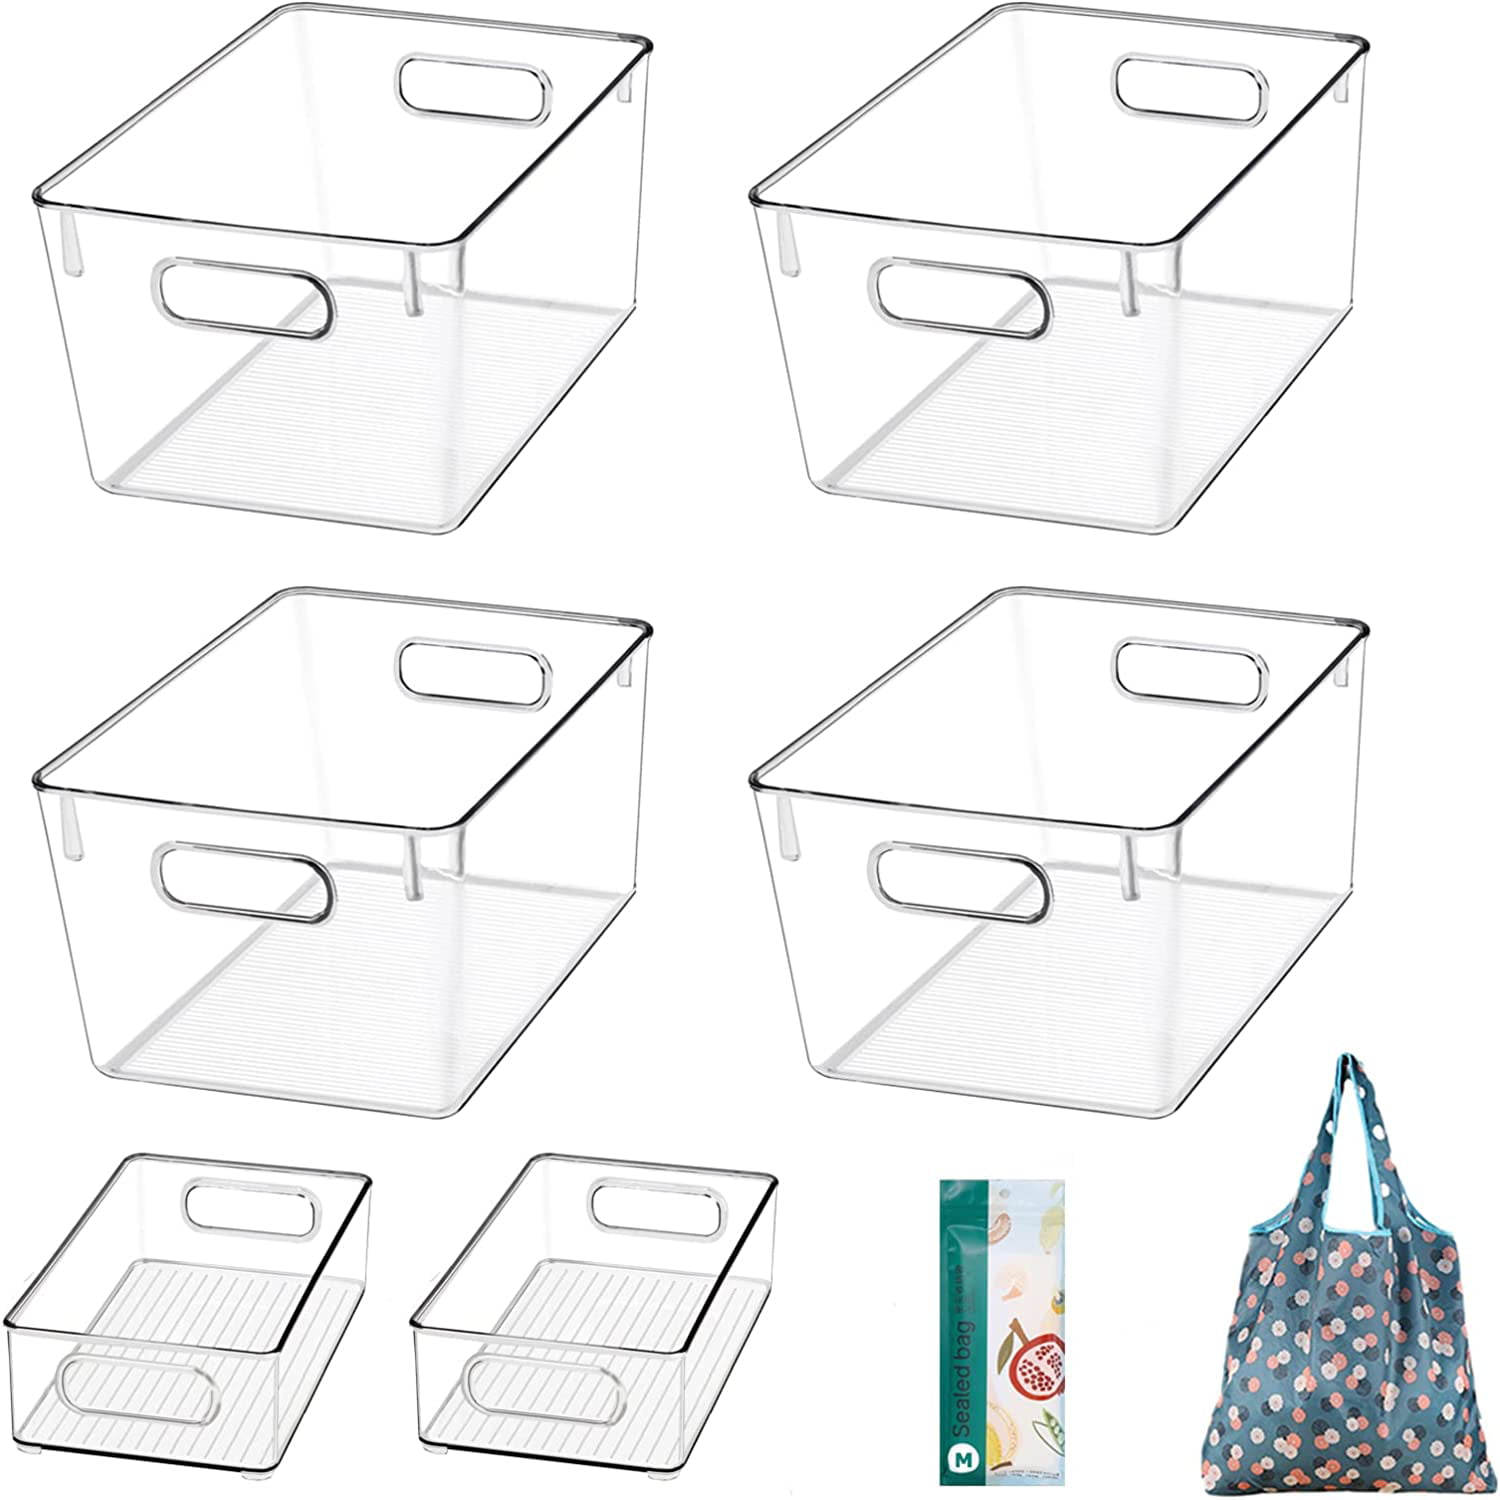 6 Pack Clear Space Plastic Storage Bins For Kitchen Organization